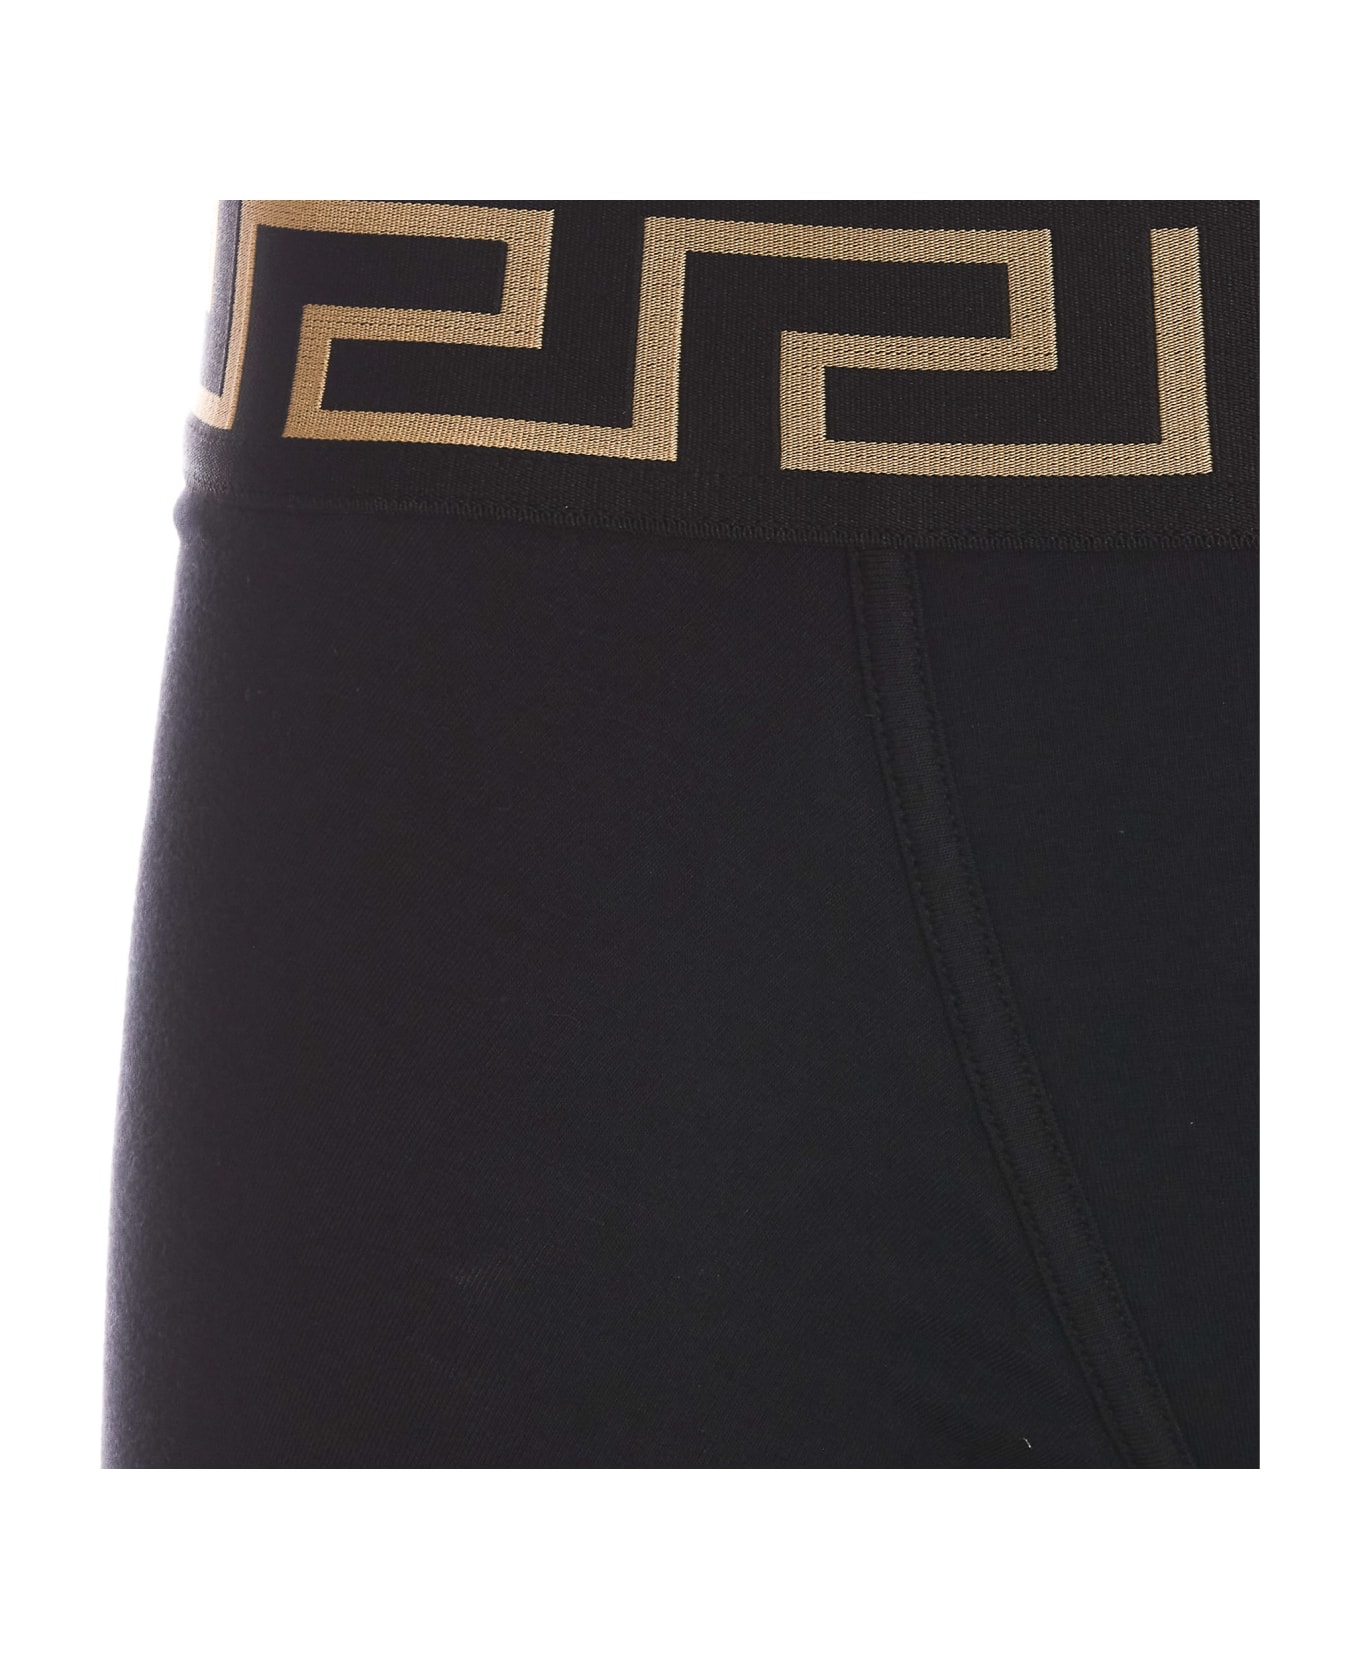 Versace Greca Border Slip Tri-pack - G Black Gold Greek Key ショーツ